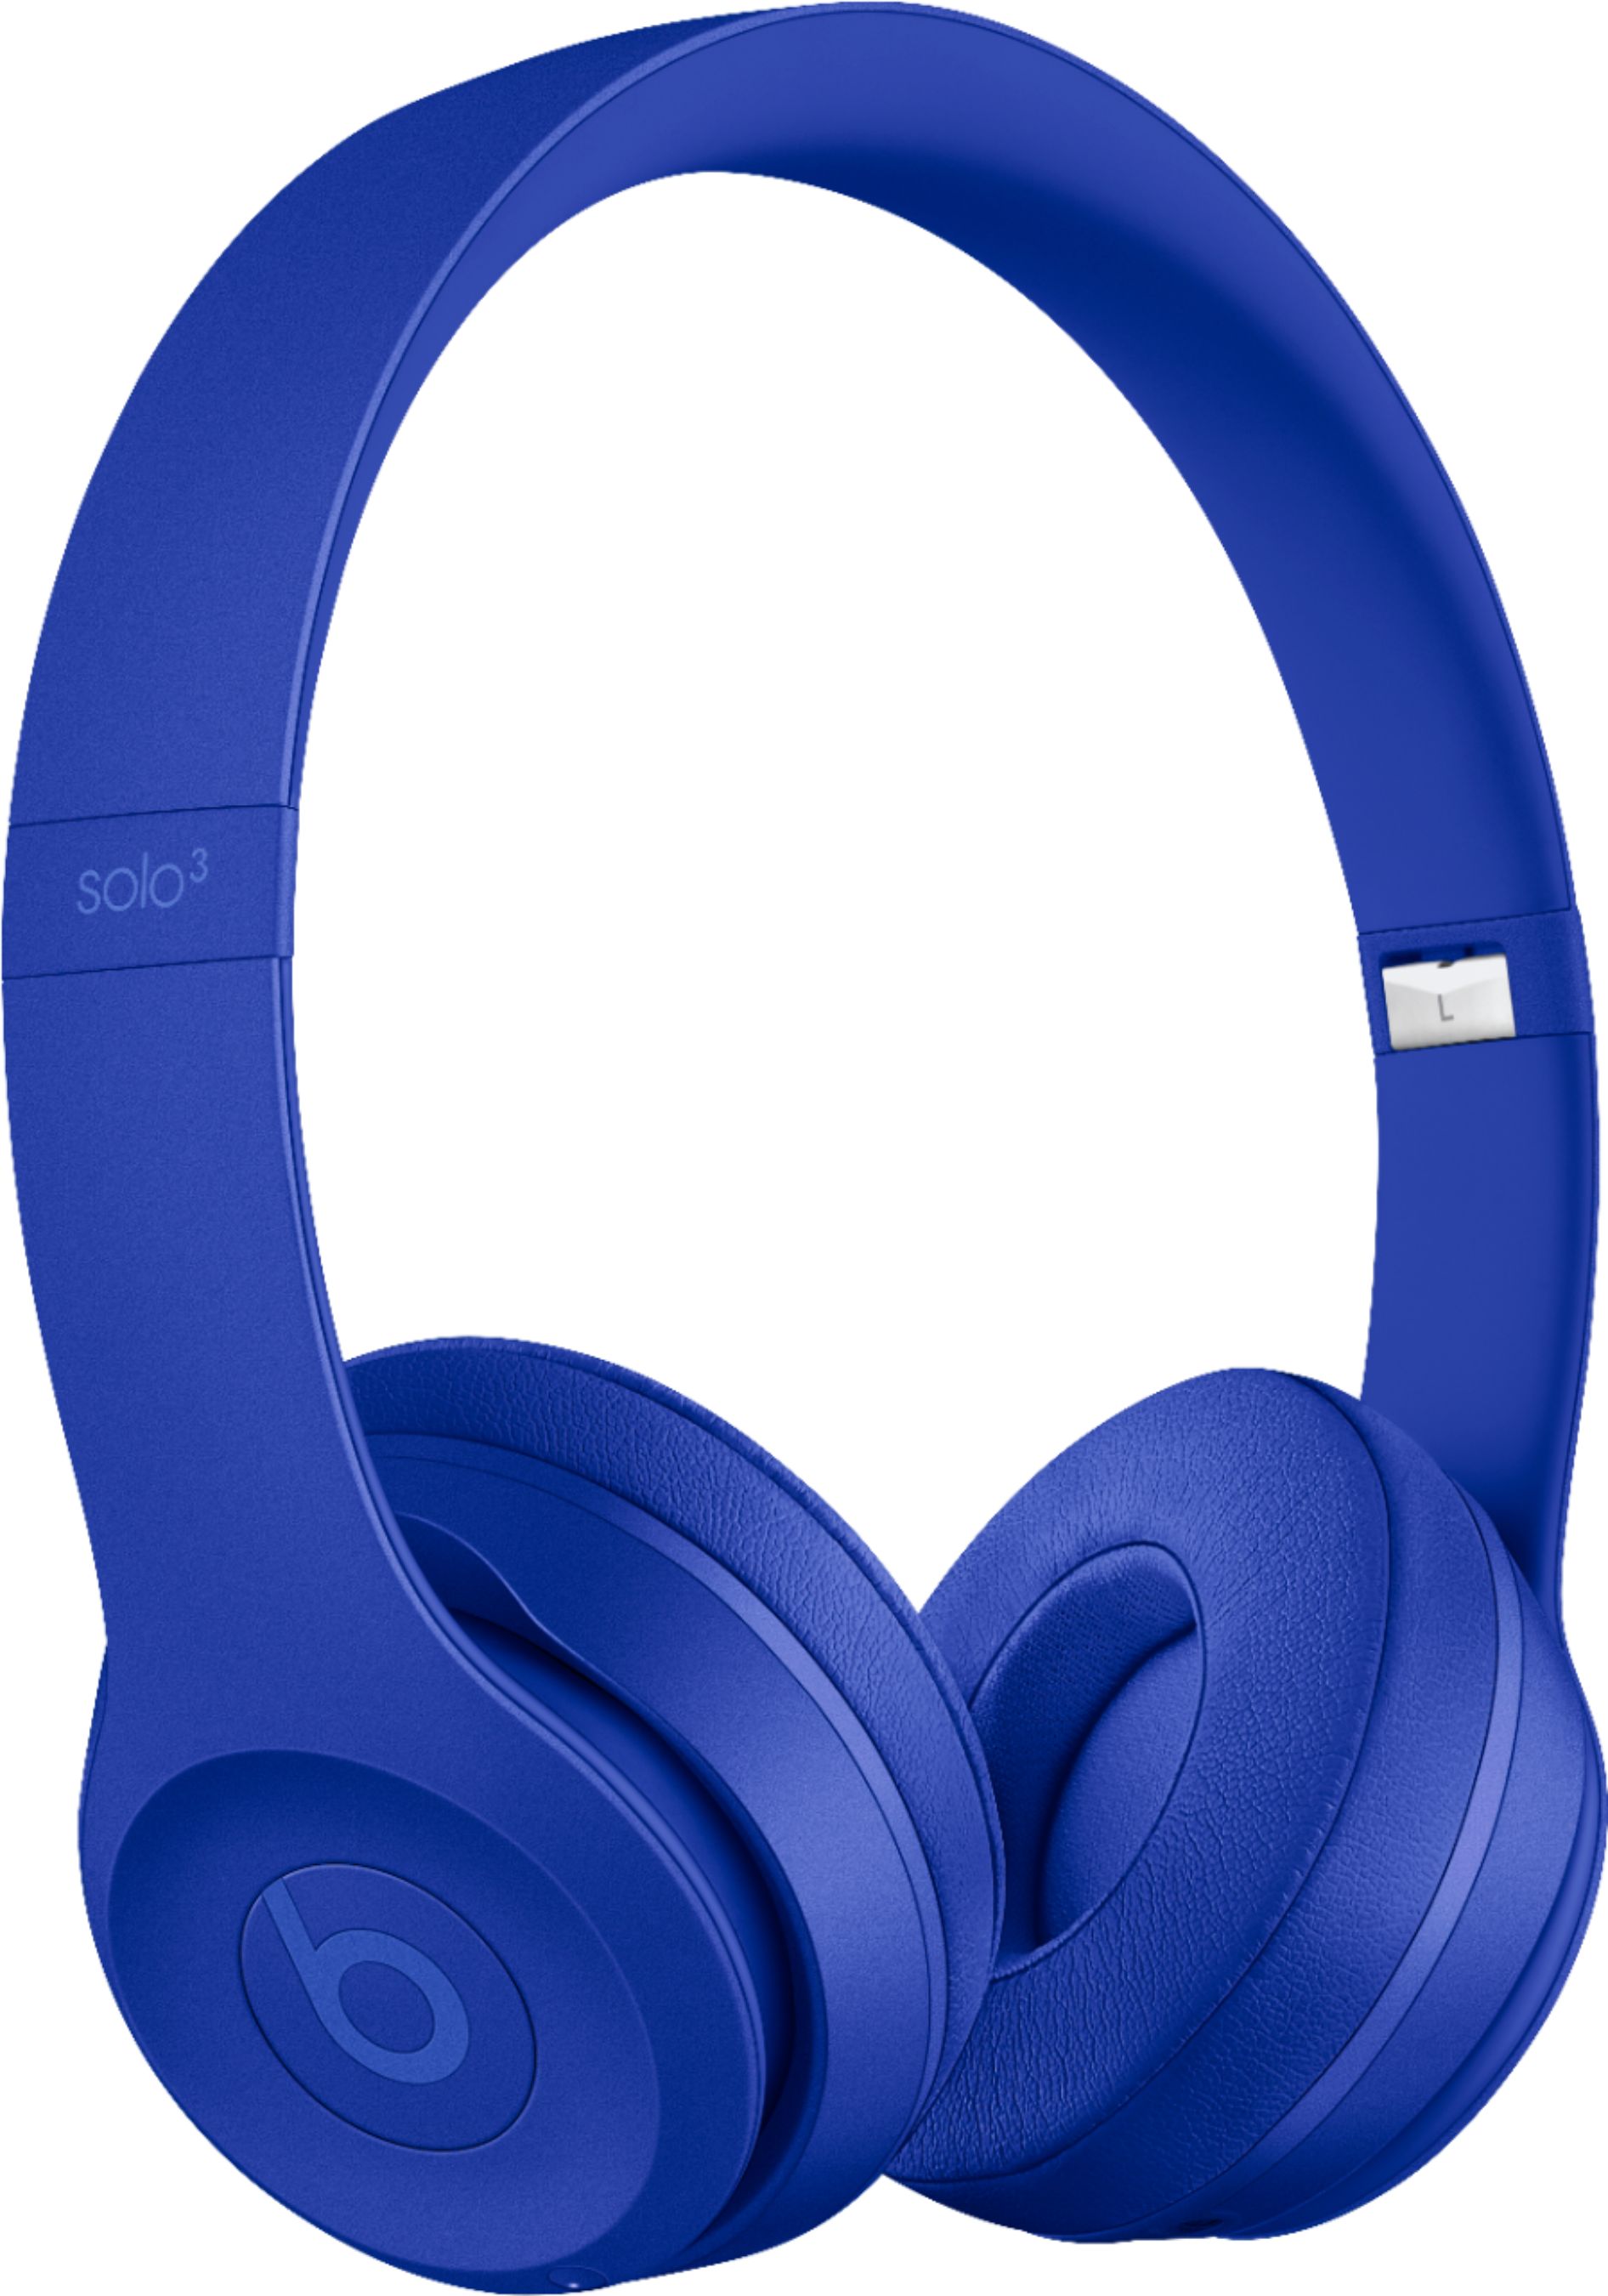 beats wireless headphones blue